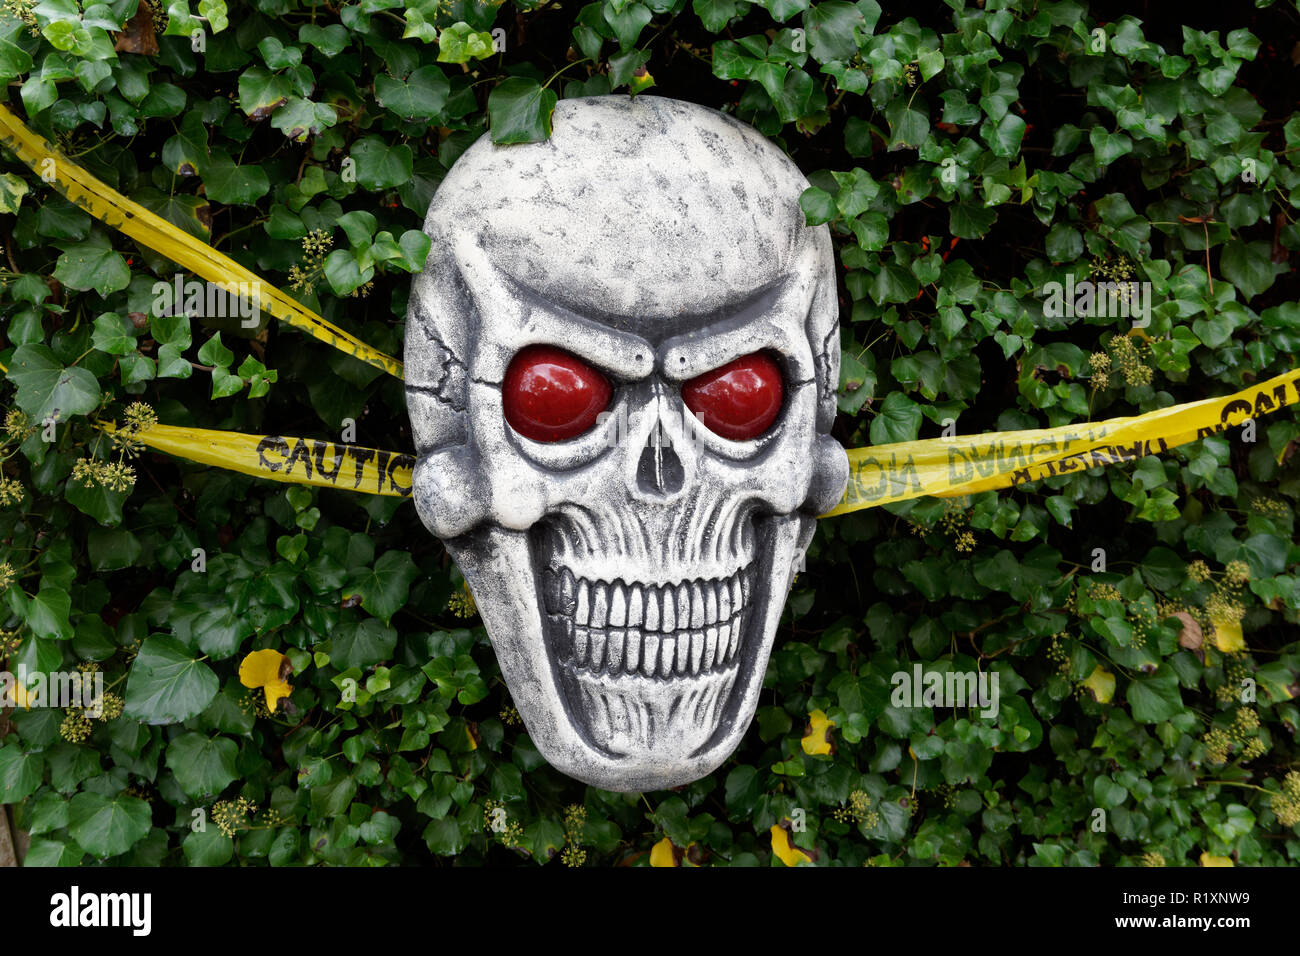 Frightening Halloween grinning skull decoration in a garden Stock Photo